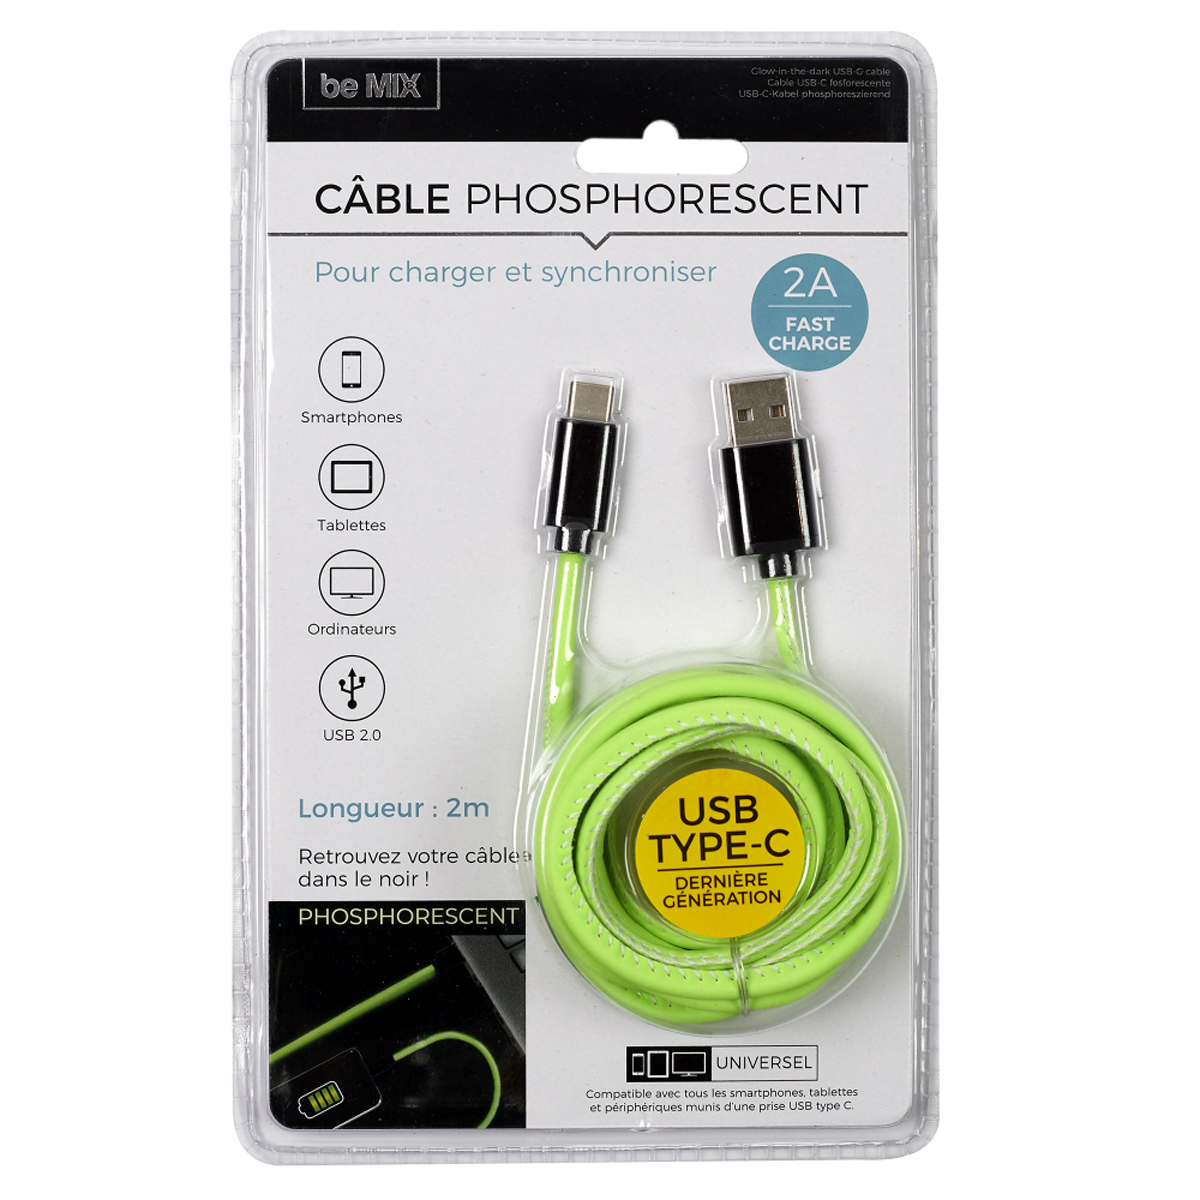 Cable de charge rapide 2A USB Type C Android, phosphorescent - 2 m - [A1223]